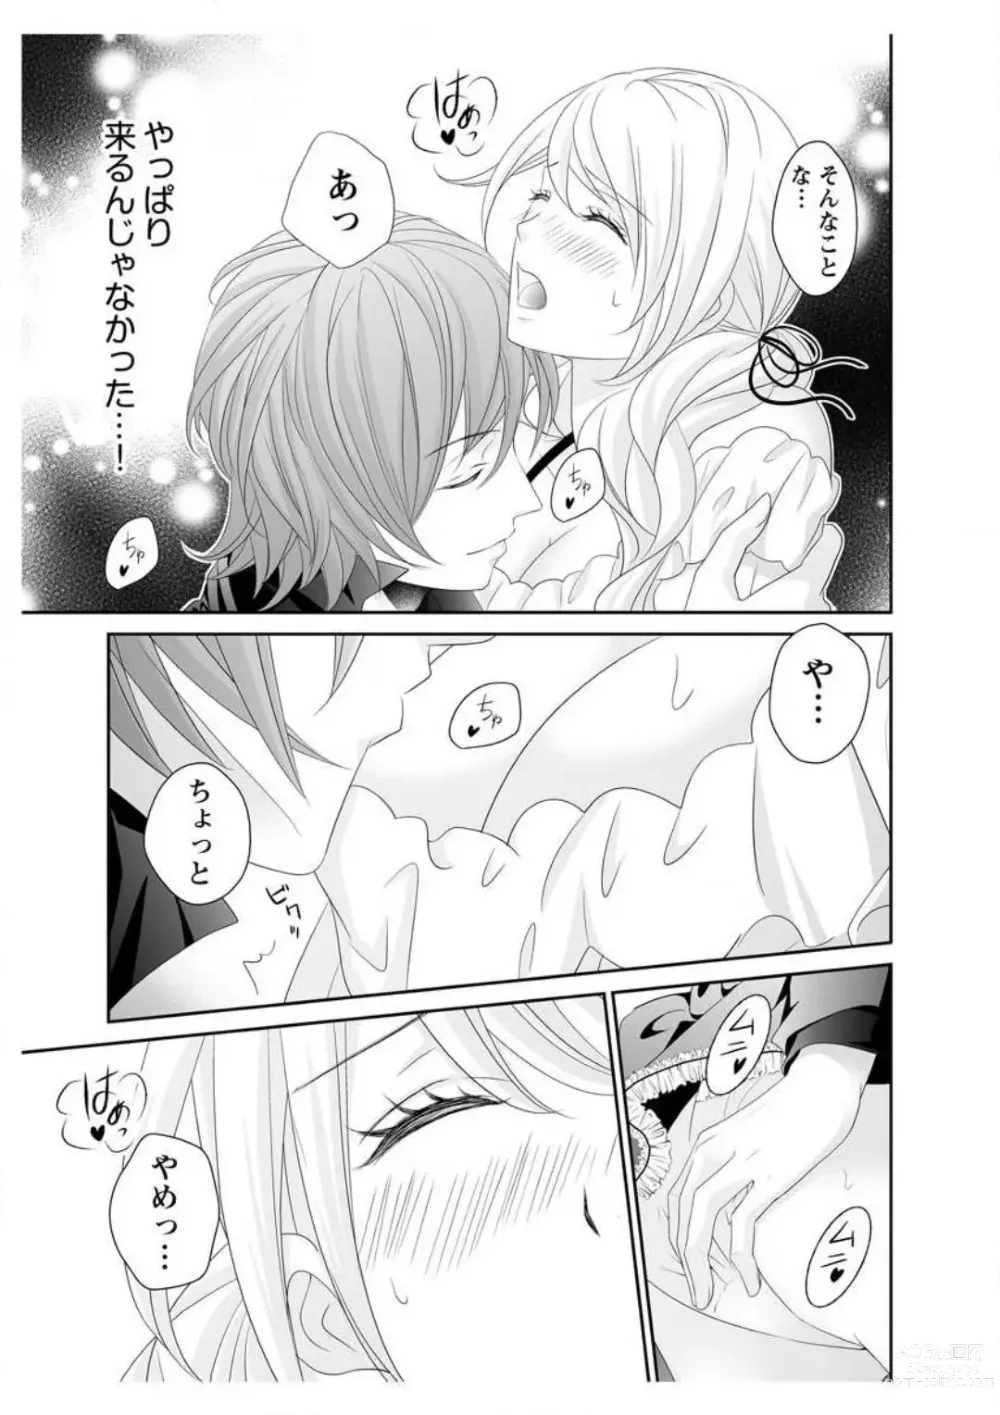 Page 15 of manga Ero ◆ Meruhen Aoi Tori 1-10